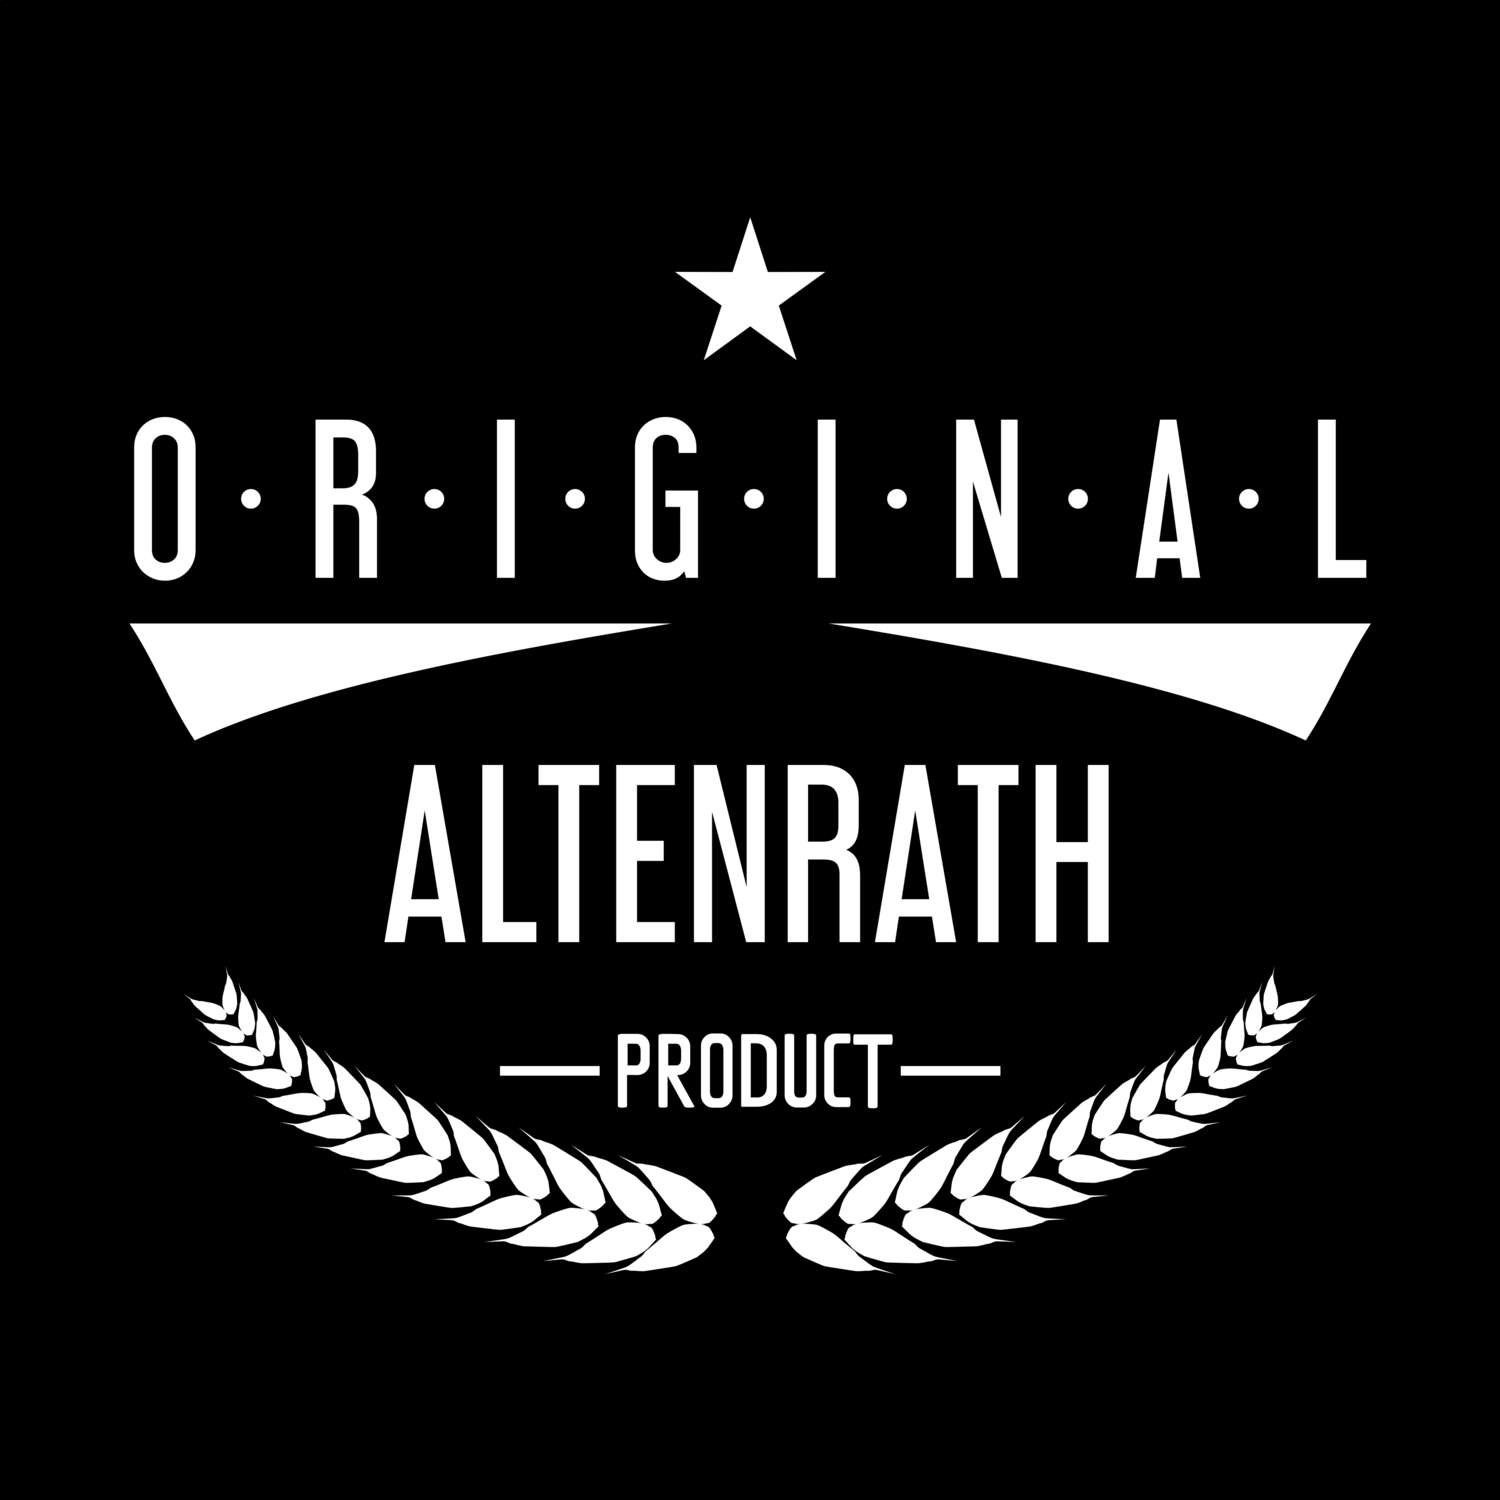 Altenrath T-Shirt »Original Product«